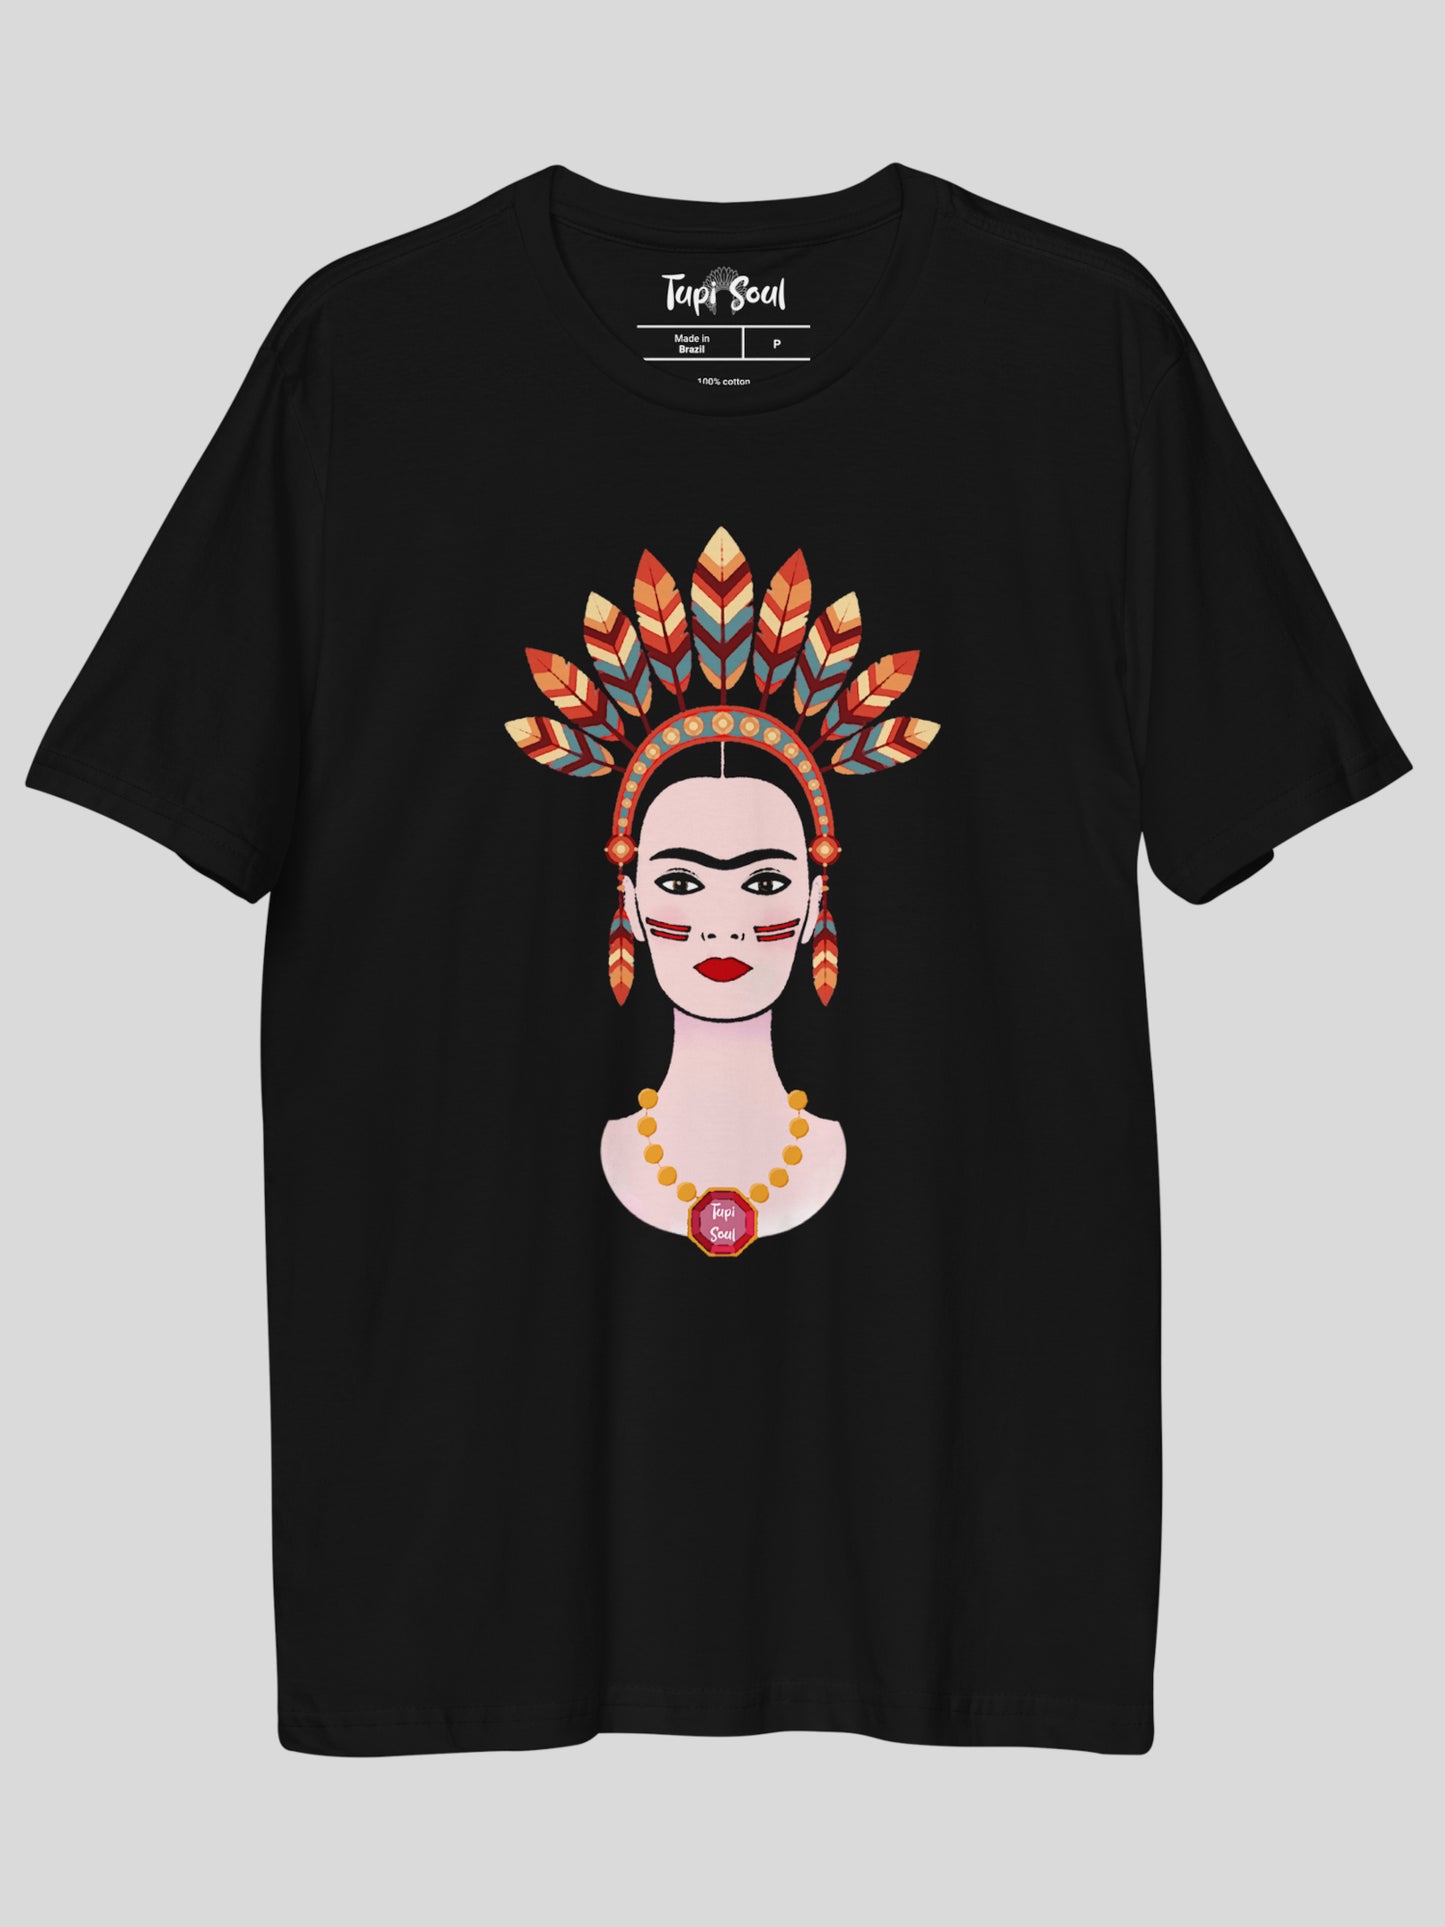 Camiseta Frida Kahlo de Cocar: Diversidade Cultural